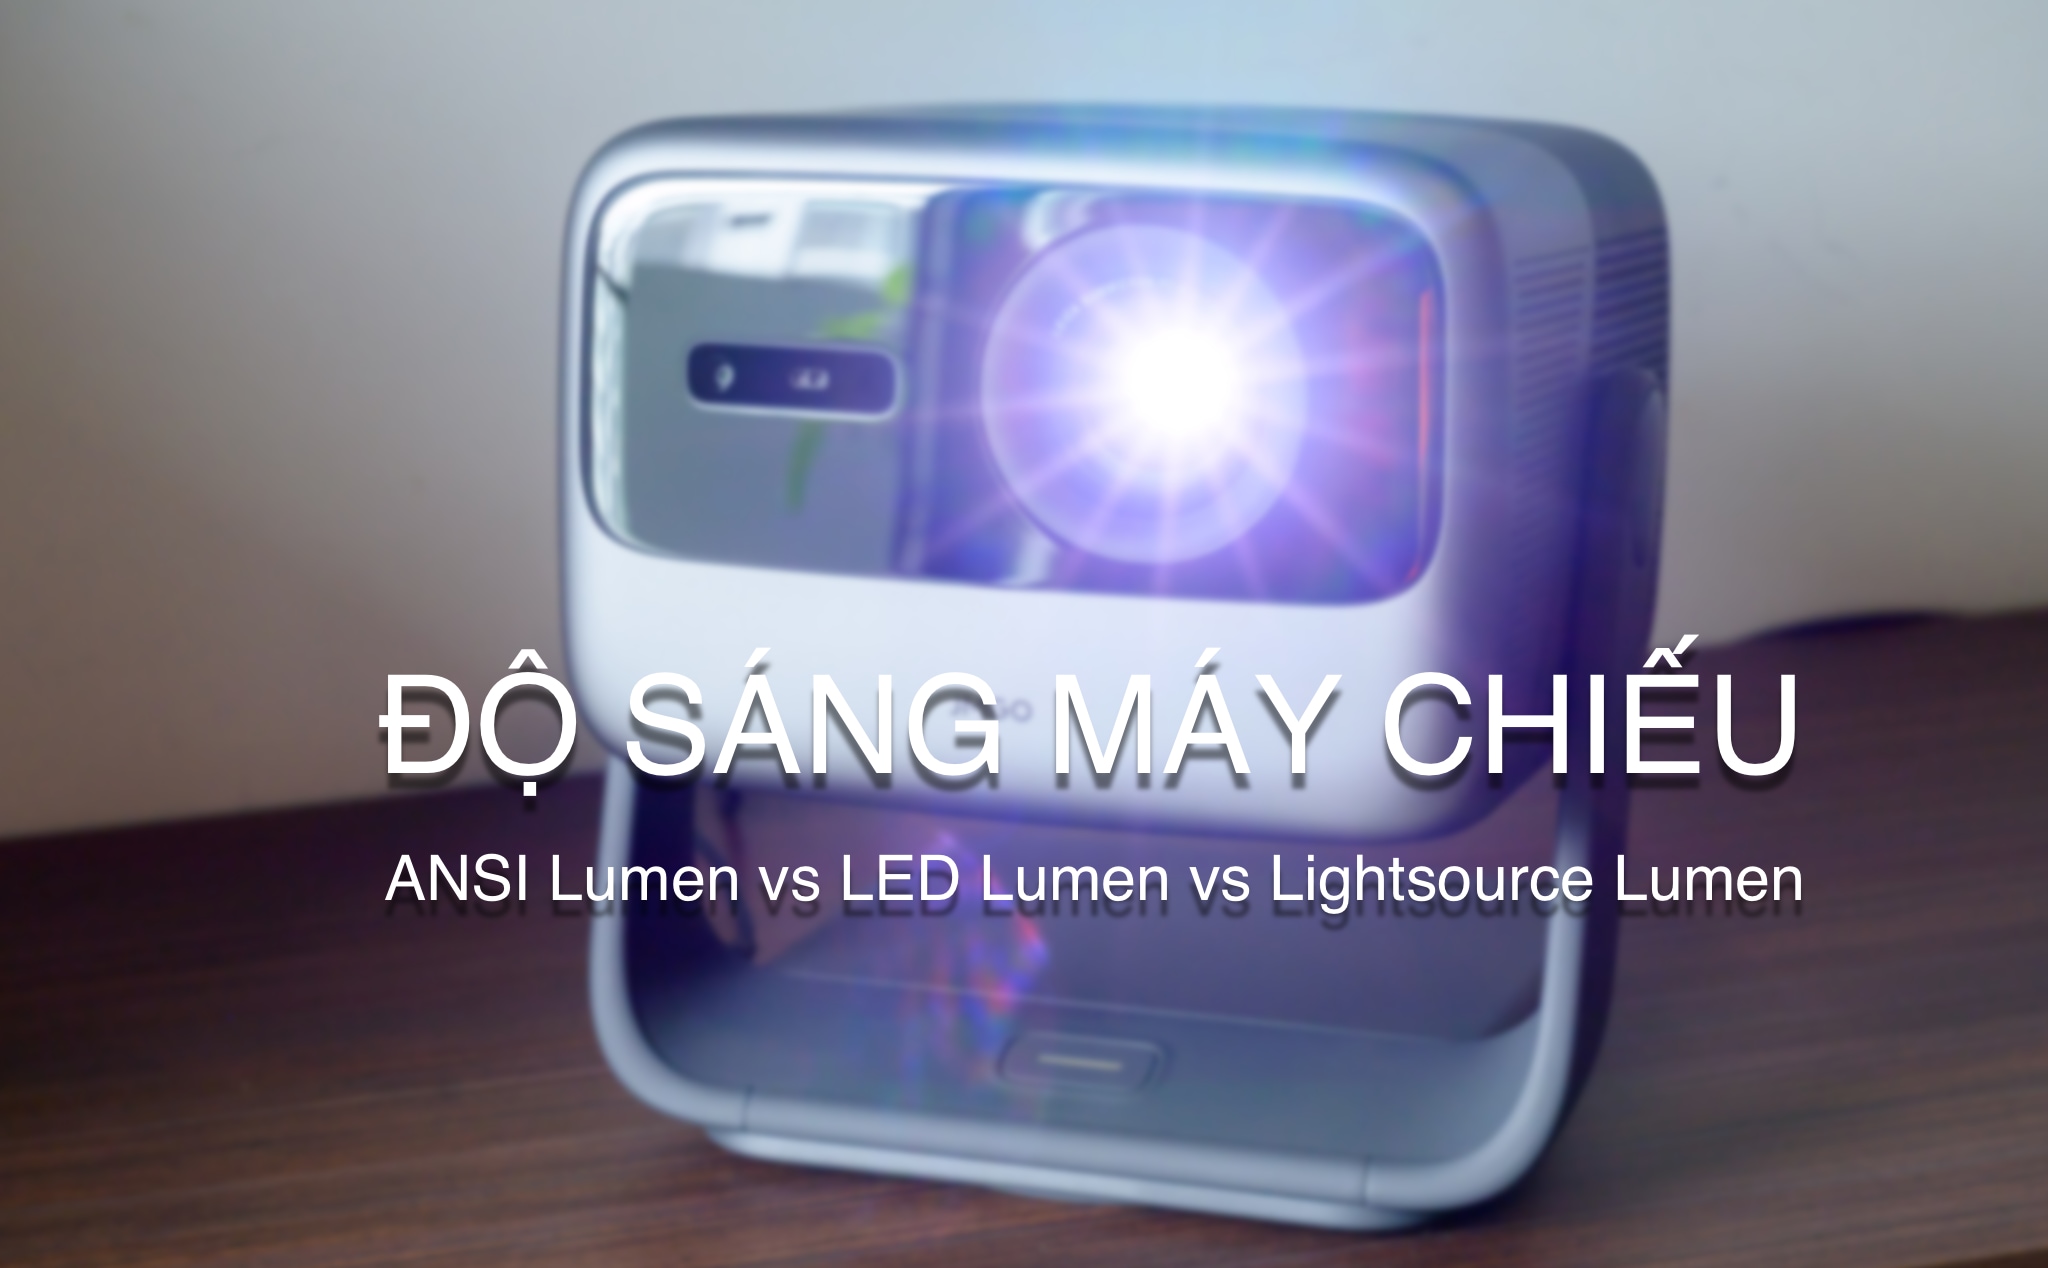 ANSI Lumens, Light Source Lumens, and LED Lumens?